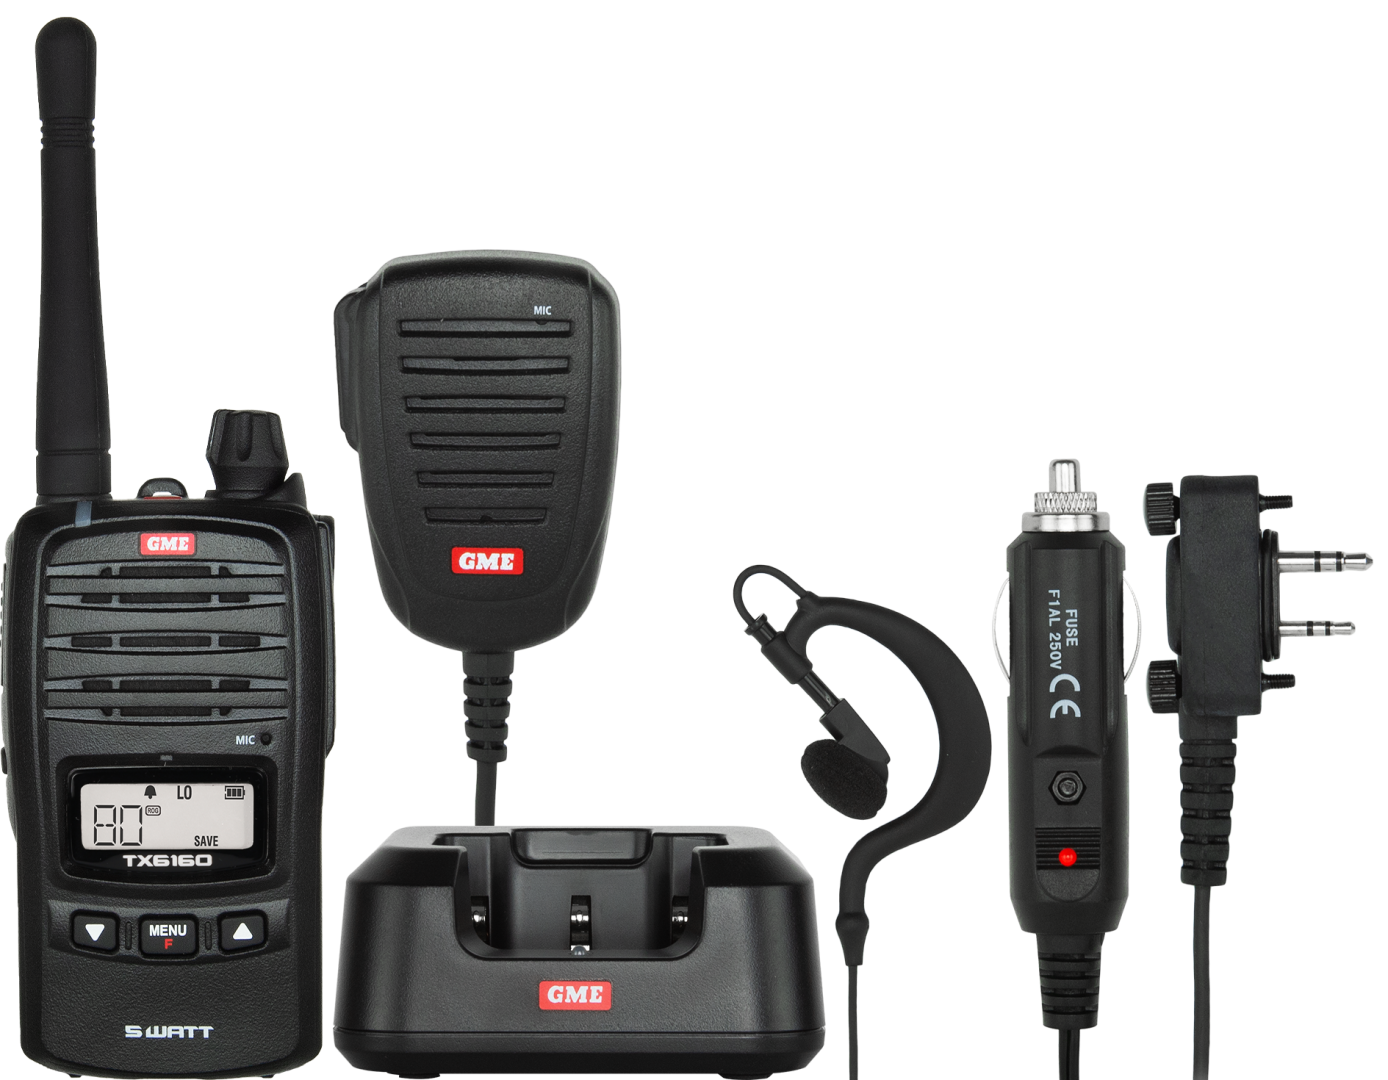 GME TX6160 5/1 Watt UHF CB Handheld Radio | GME